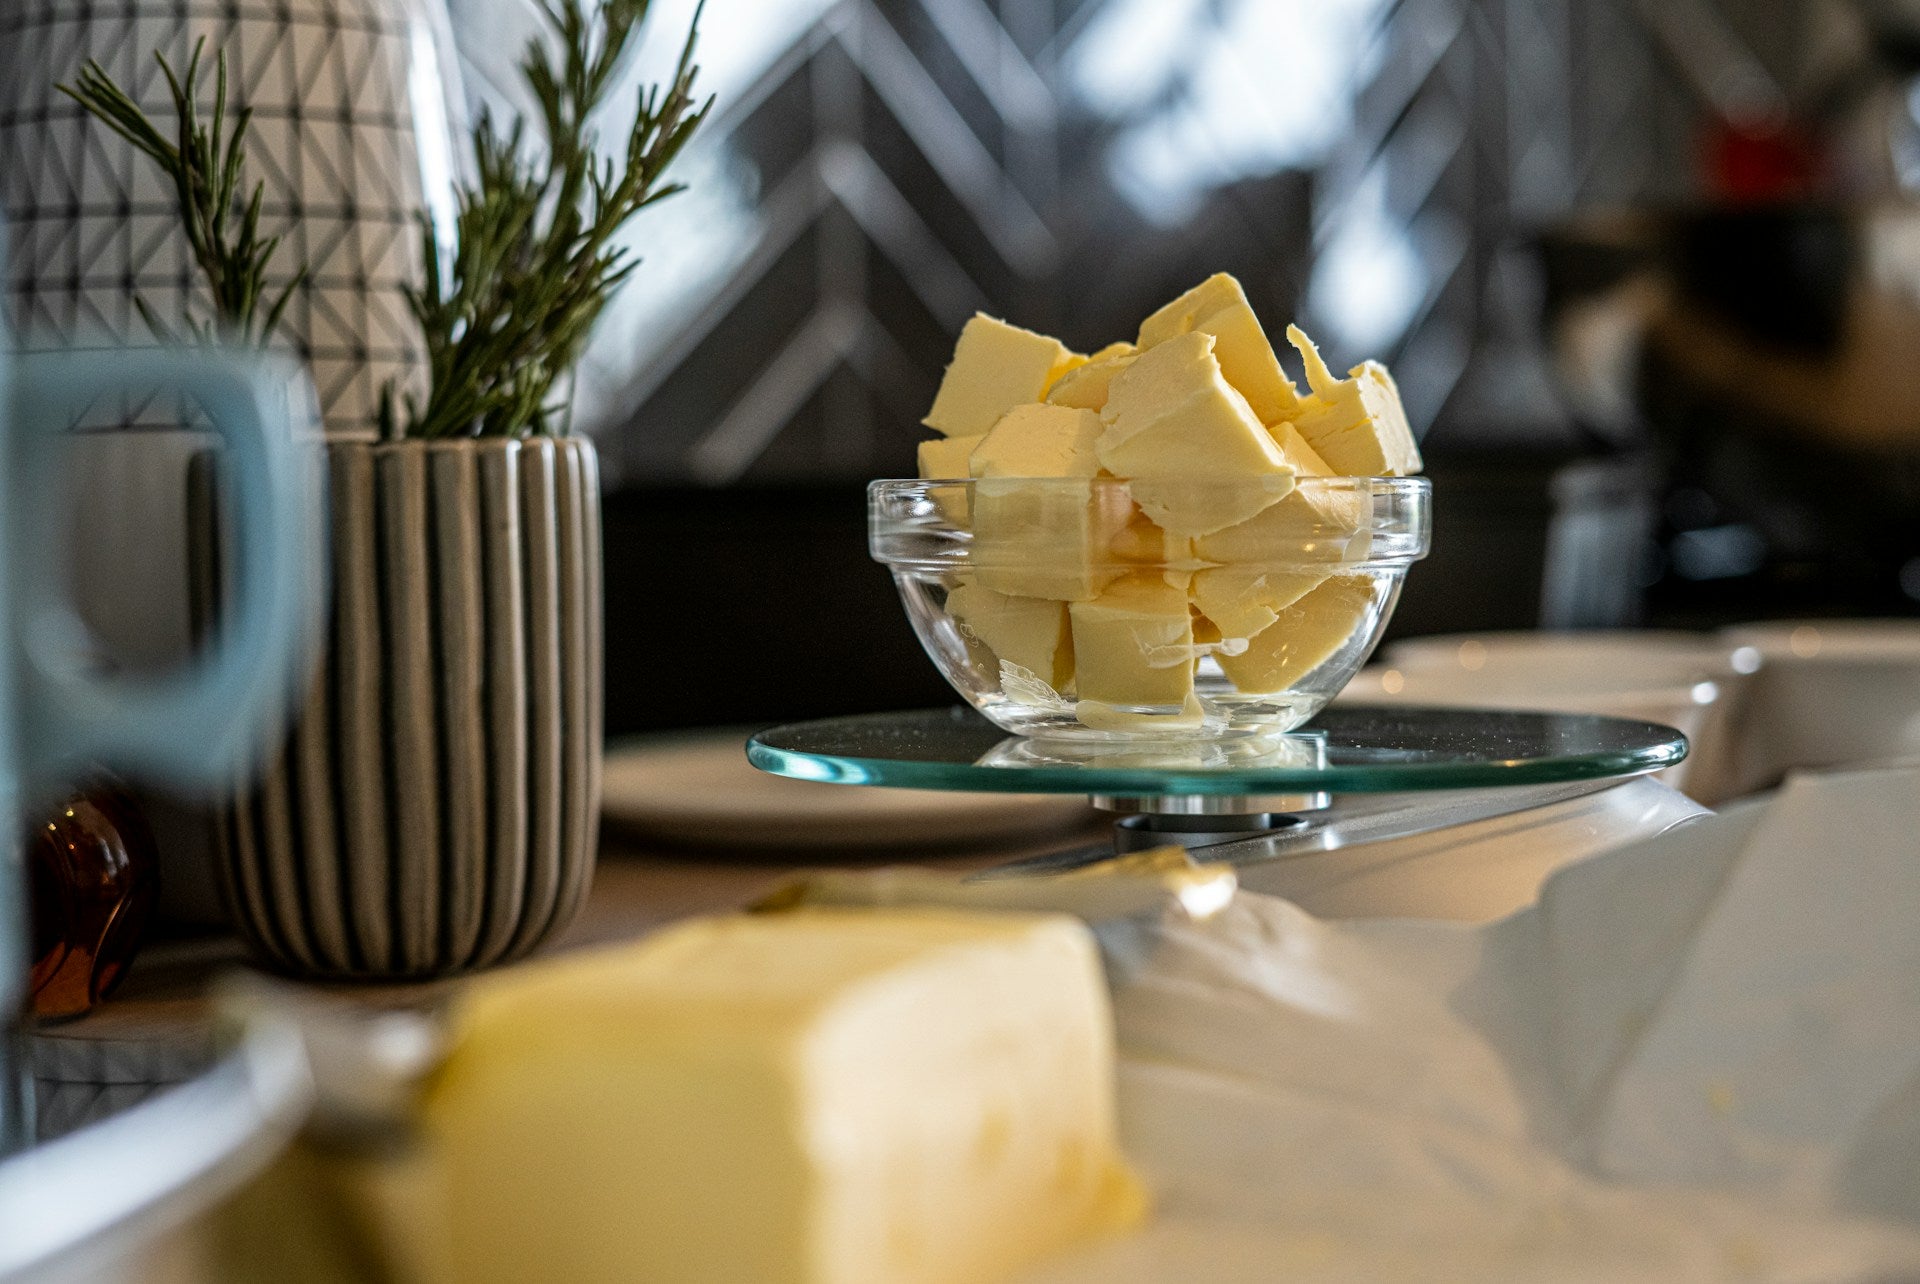 The Best Butter Websites to Buy Online